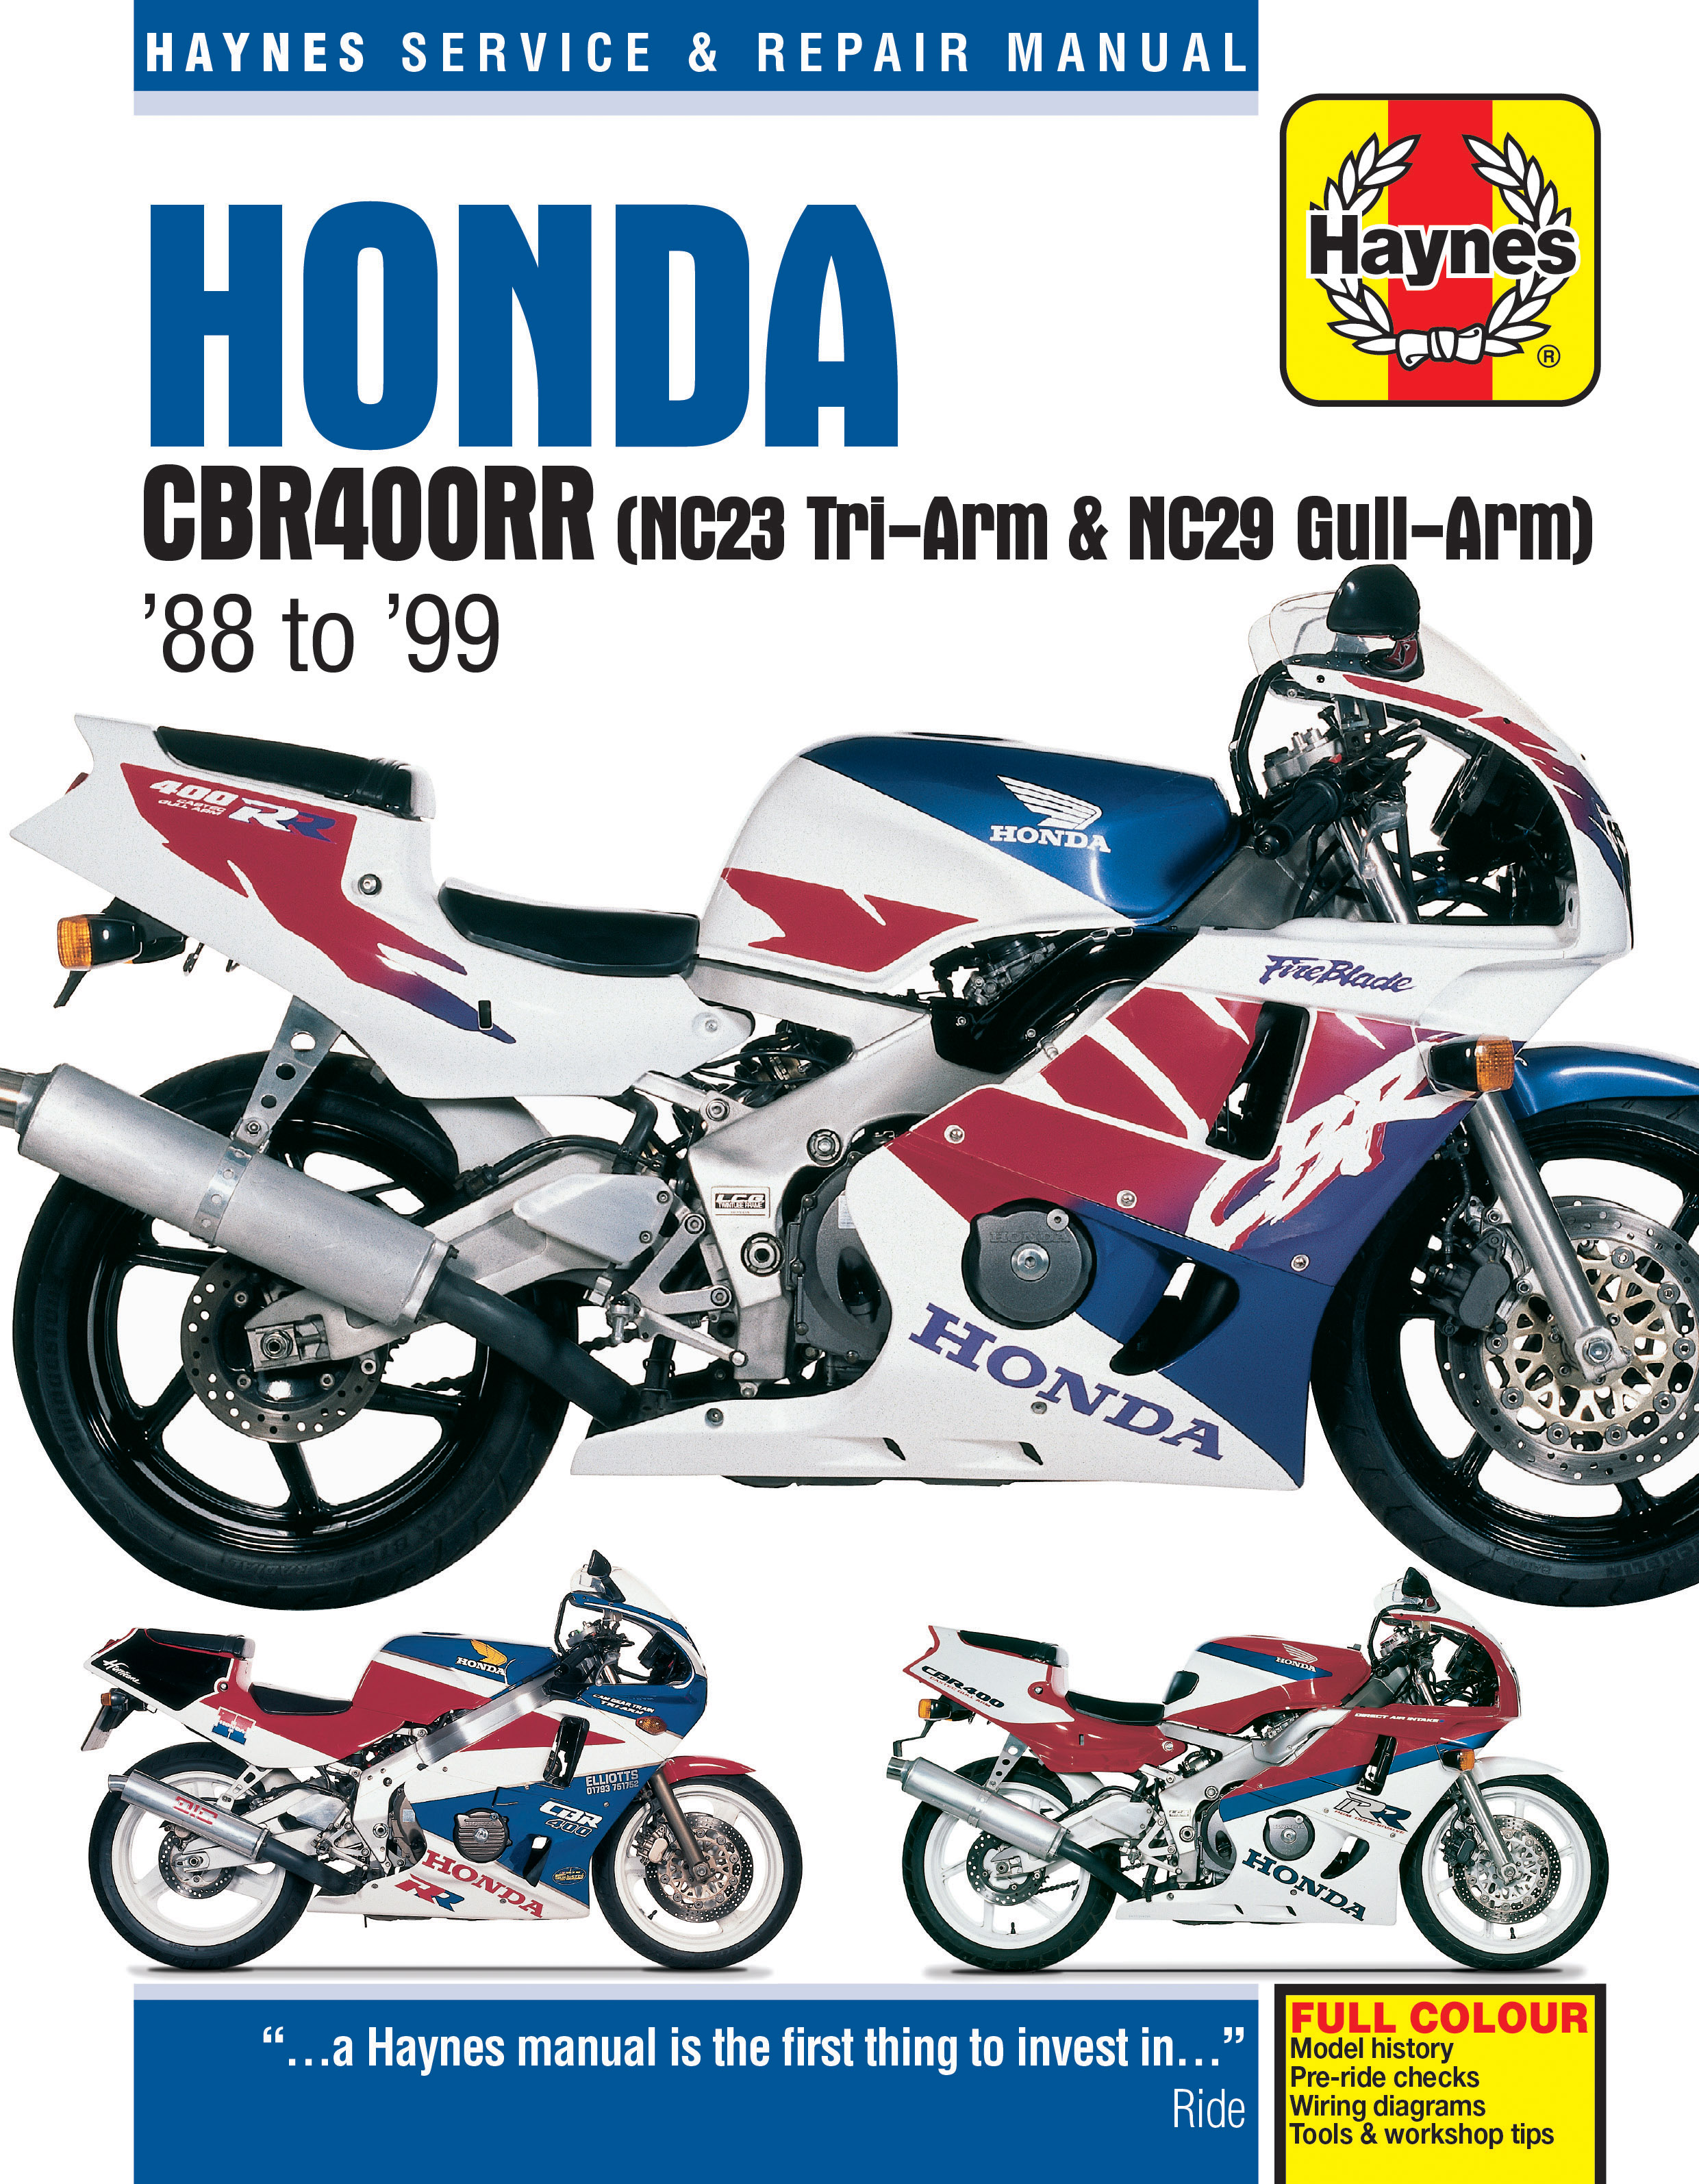 ISBN 9781785213212 product image for Honda CBR400RR Fours (88 - 99) Haynes Repair Manual | upcitemdb.com